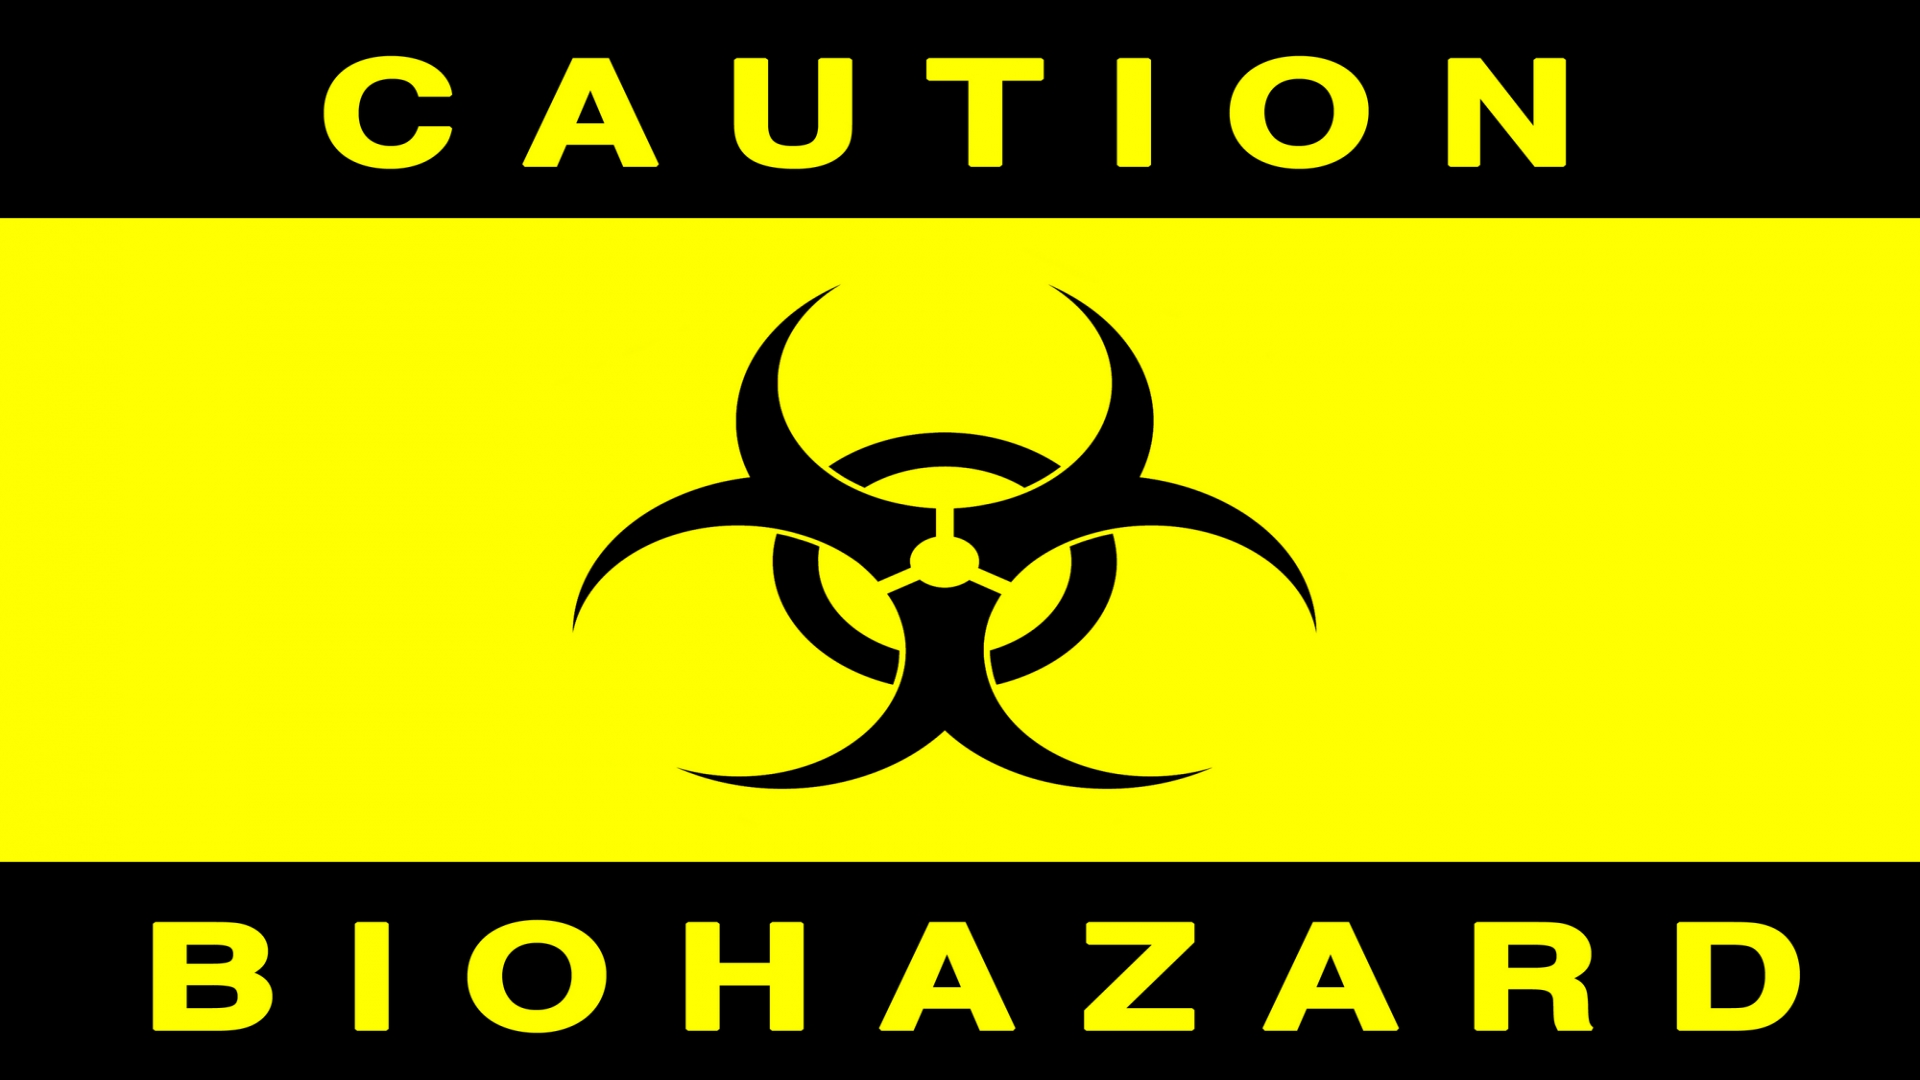 Free Download 1920x1080 Resolution of high definition biohazard ...